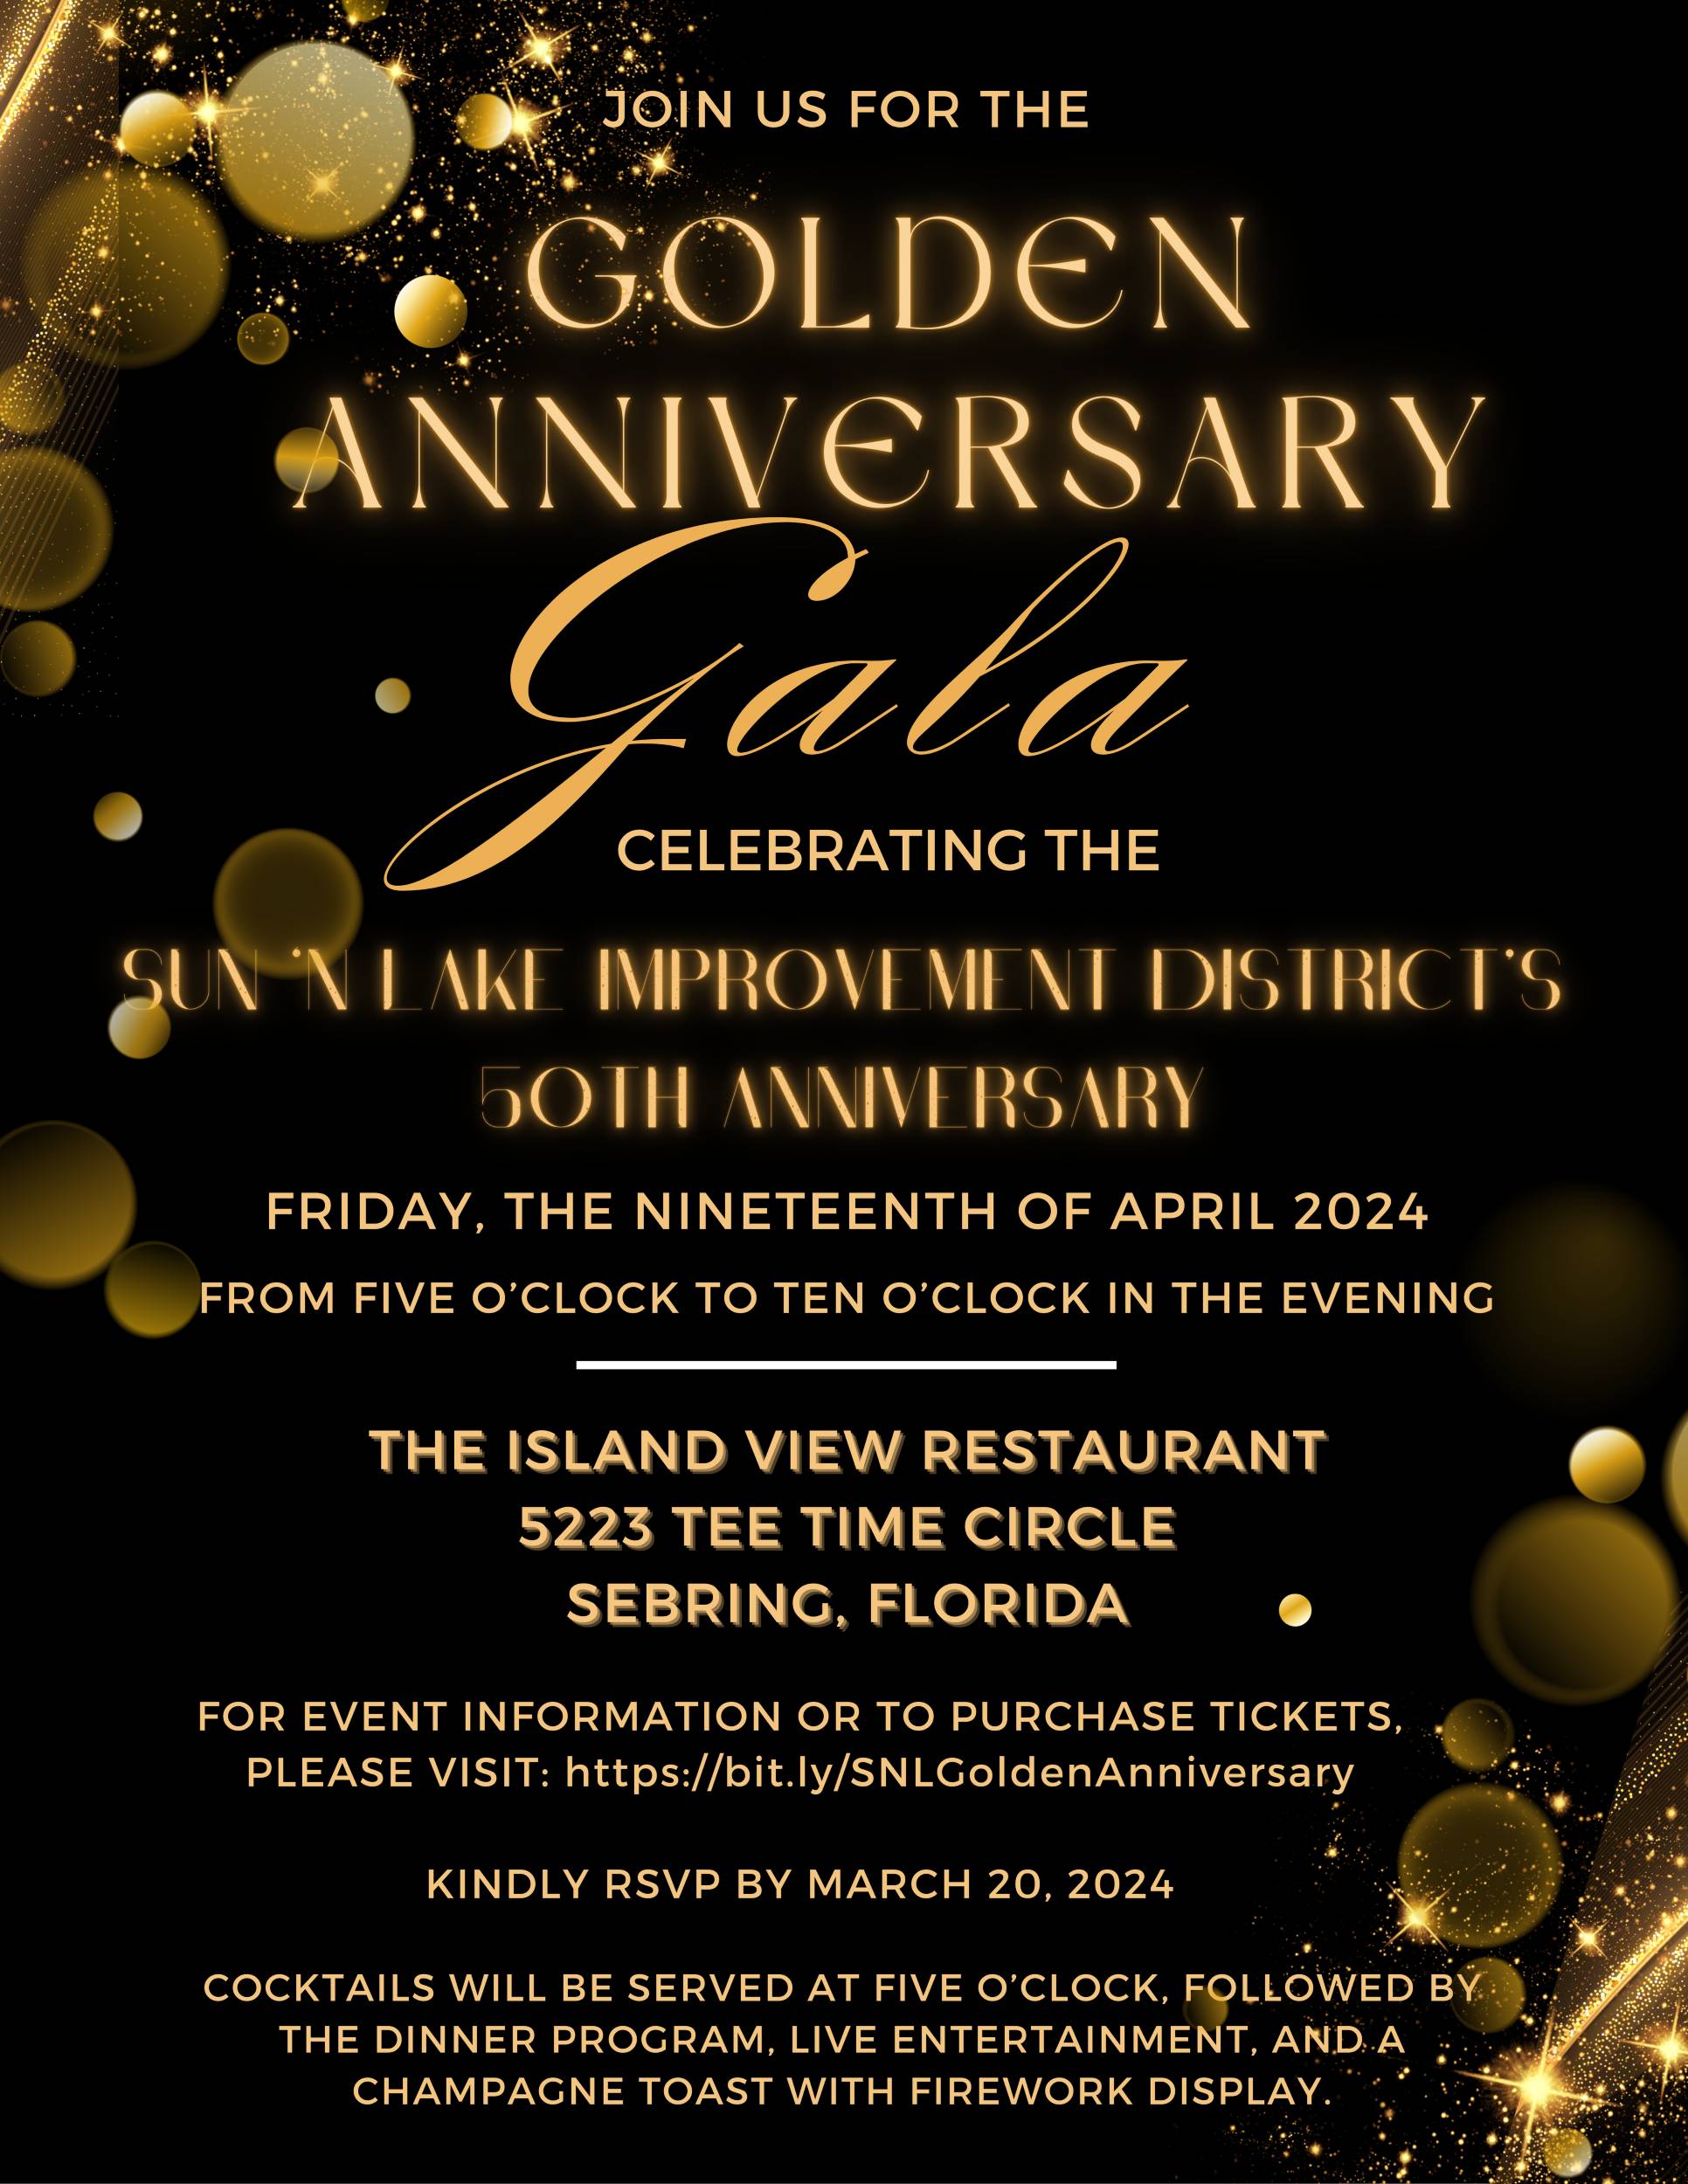 Anniversary Gala Flyer 1 - Copy (3)